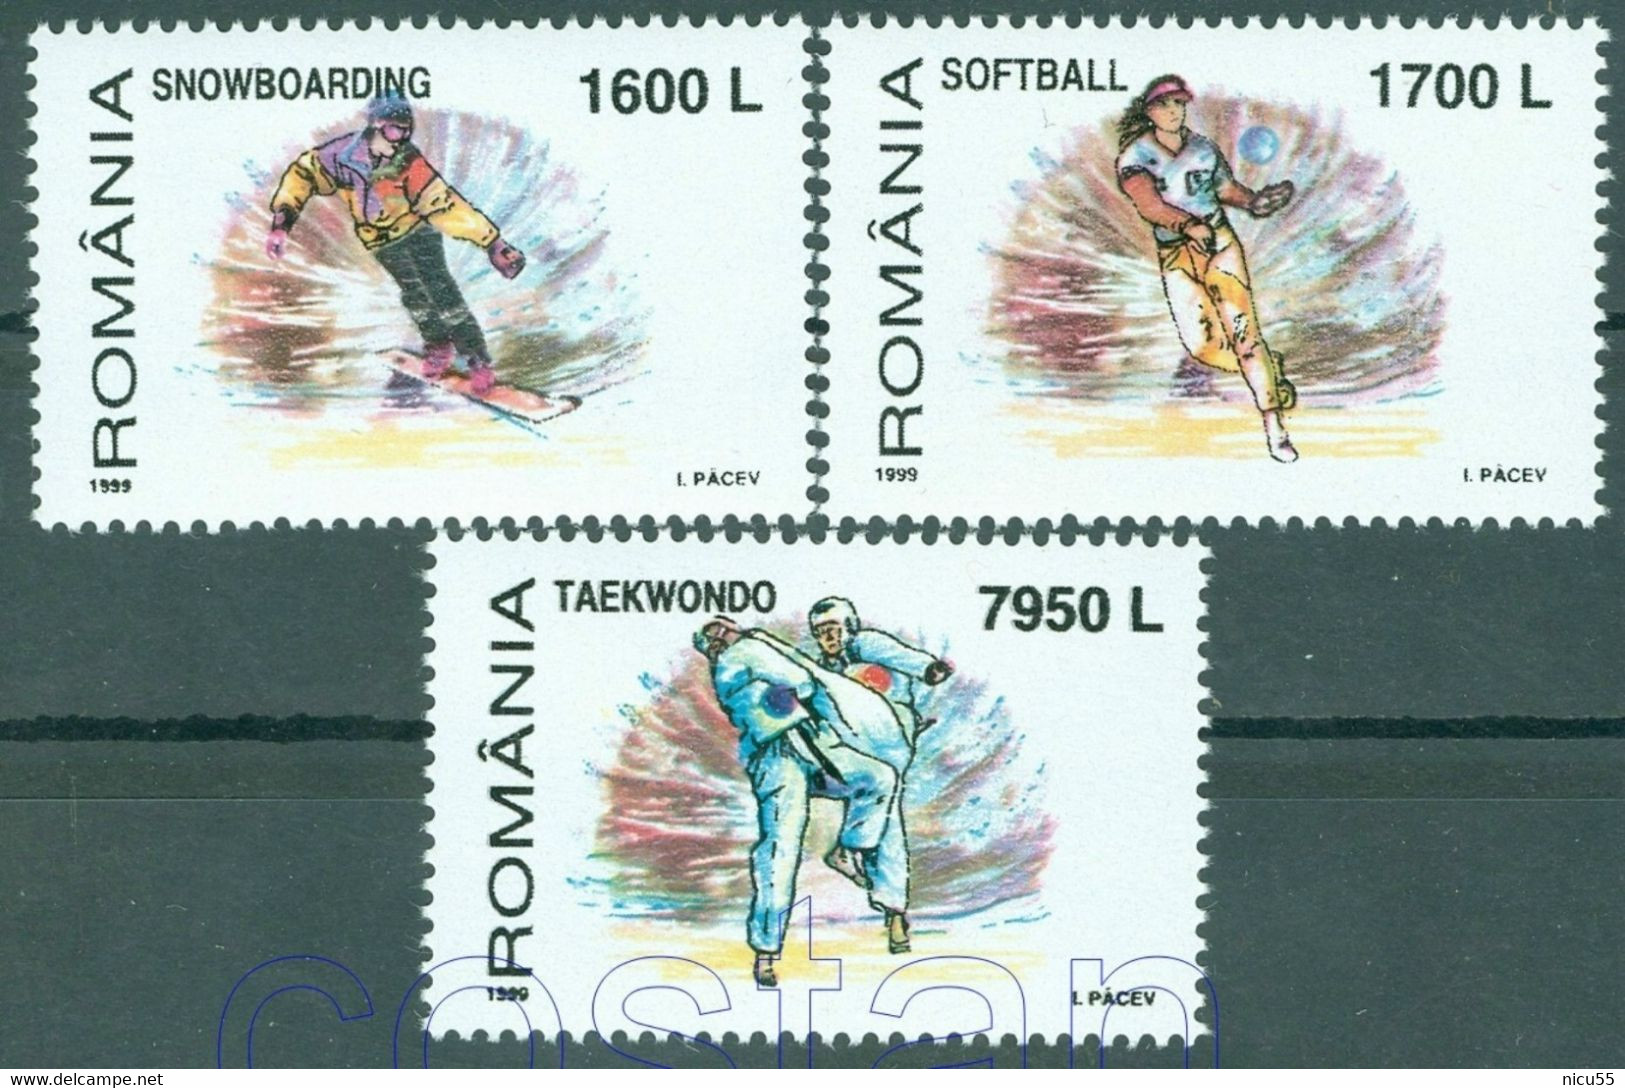 1999 Taekwondo/Tae Kwon Do,Softball,Snowboarding,New Olympic SPORTS,Romania,Mi.5441/Y.4568,MNH - Non Classificati